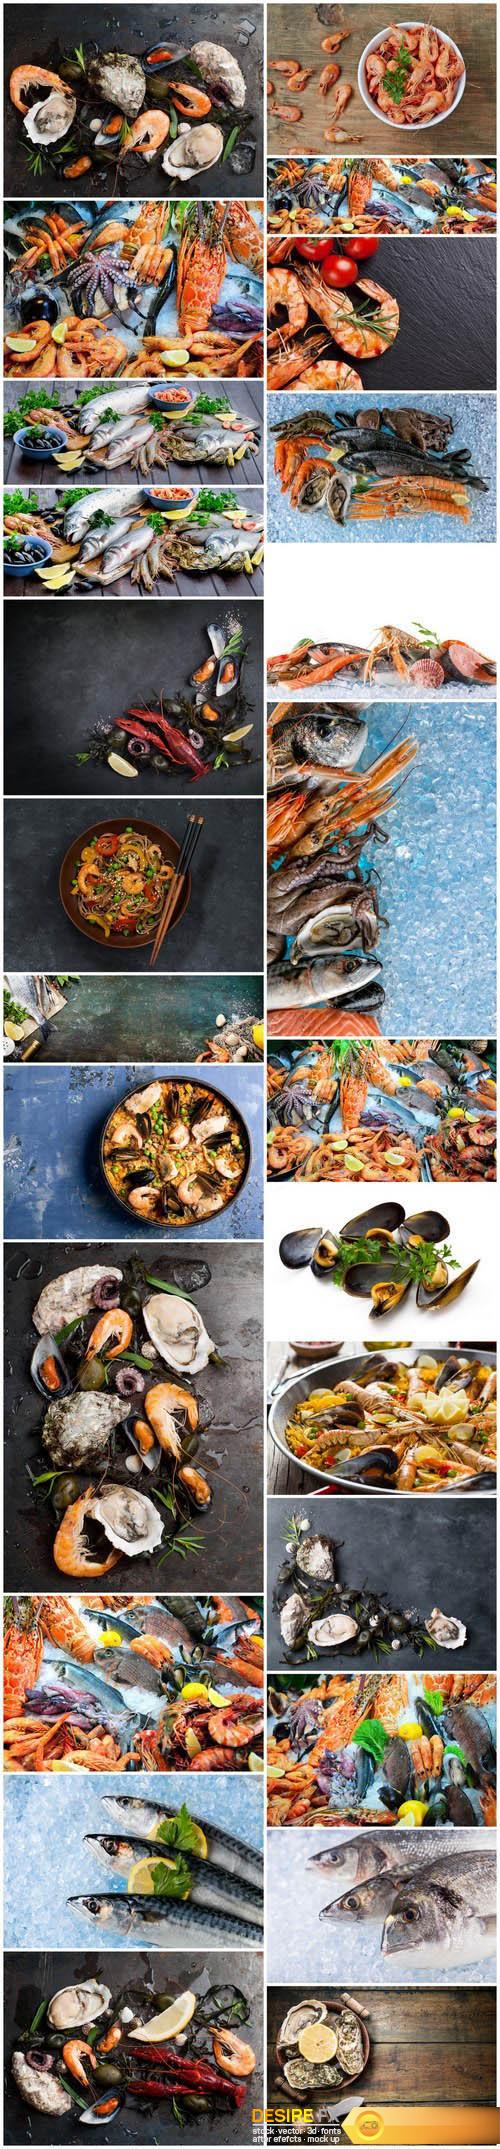 Fresh seafood - 25xUHQ JPEG Photo Stock